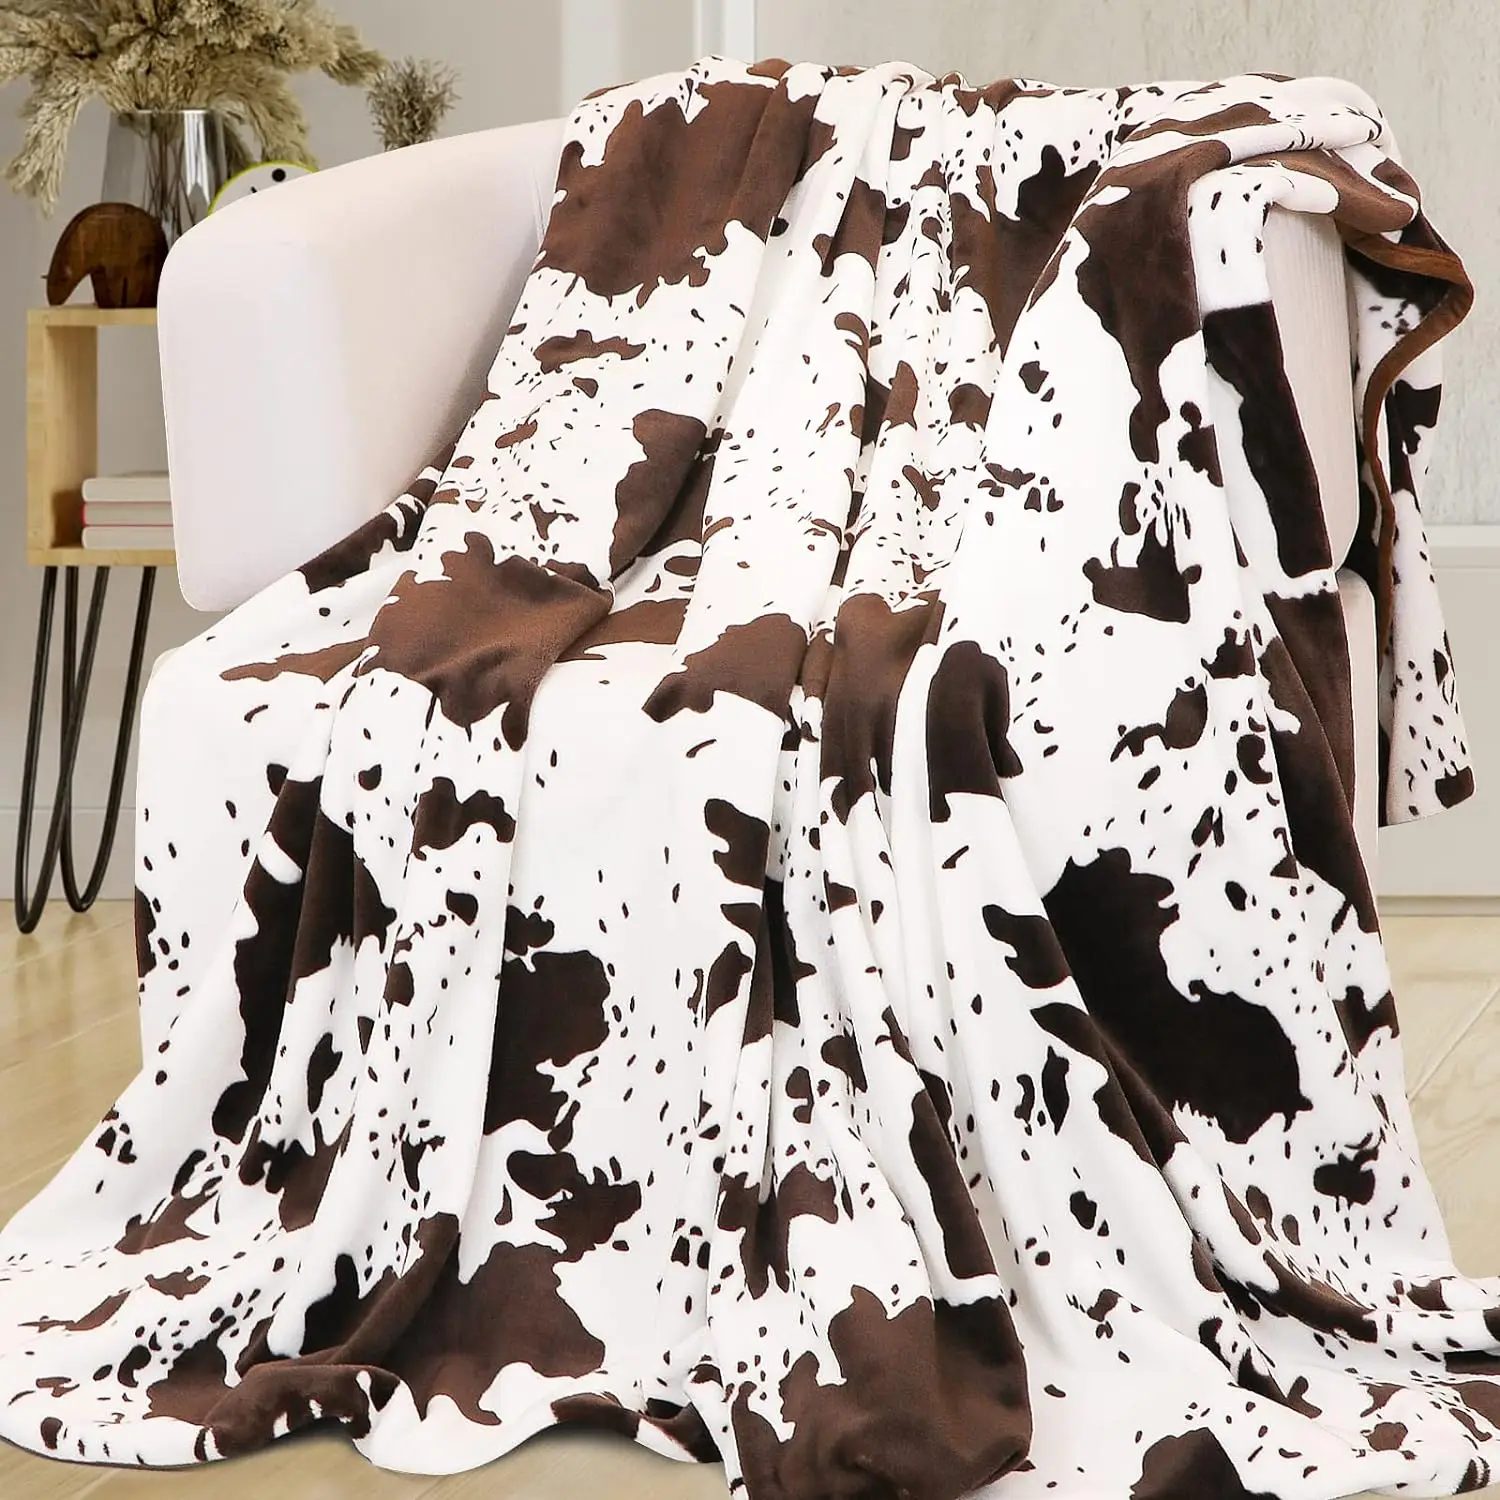 

Cute Cow Print Blanket Cozy Soft Lightweight Cow Throw Blanket Warm Fleece Fuzzy Plush All Season Sofa Bed Travel Blankets Gift